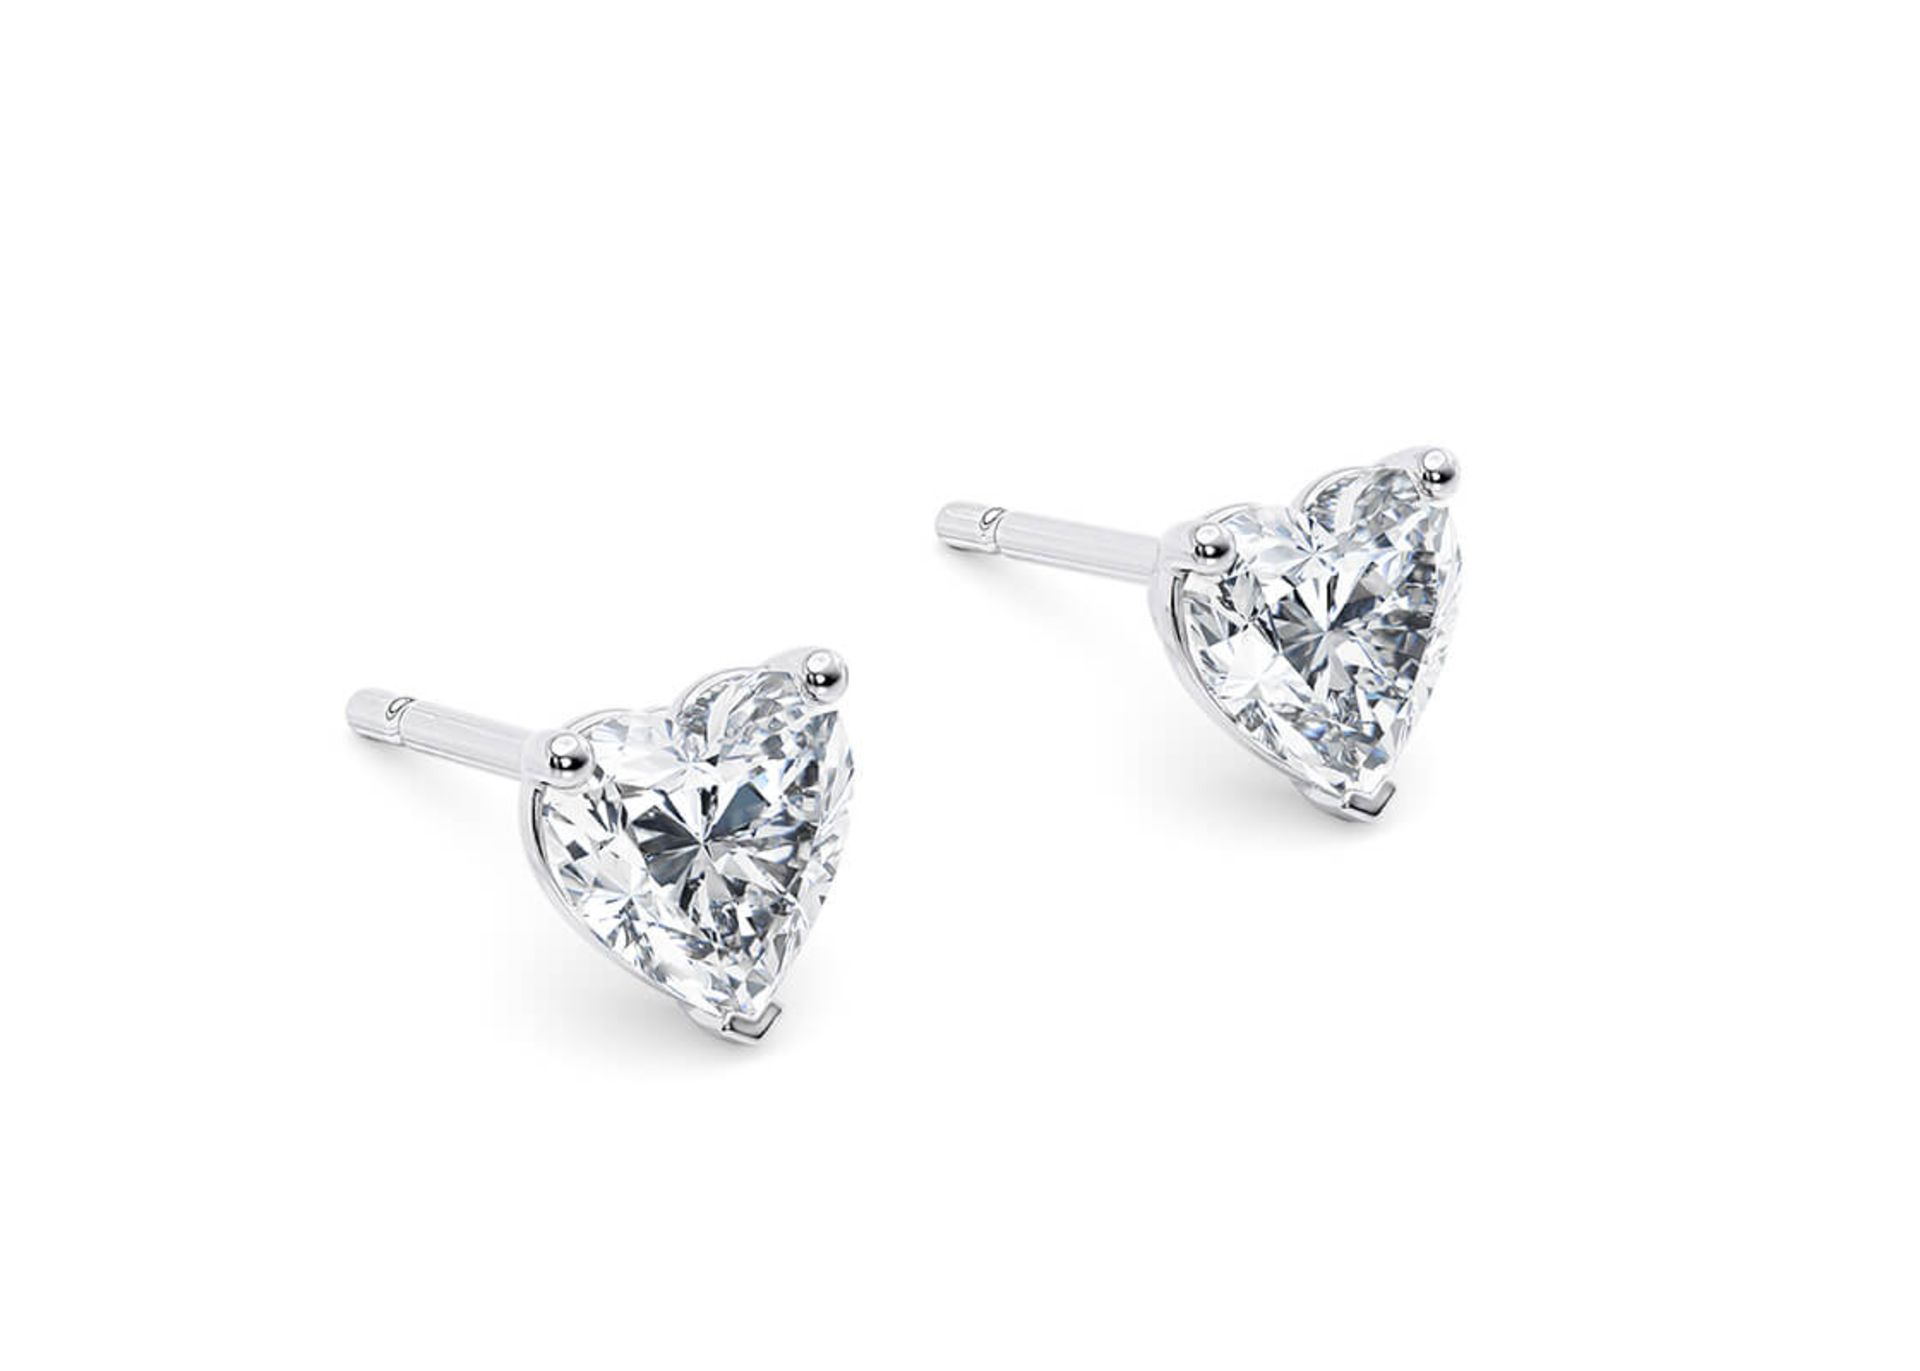 Heart Cut 4.00 Carat Diamond Earrings Set in 18kt White Gold - E Colour VS Clarity - IGI - Image 2 of 3